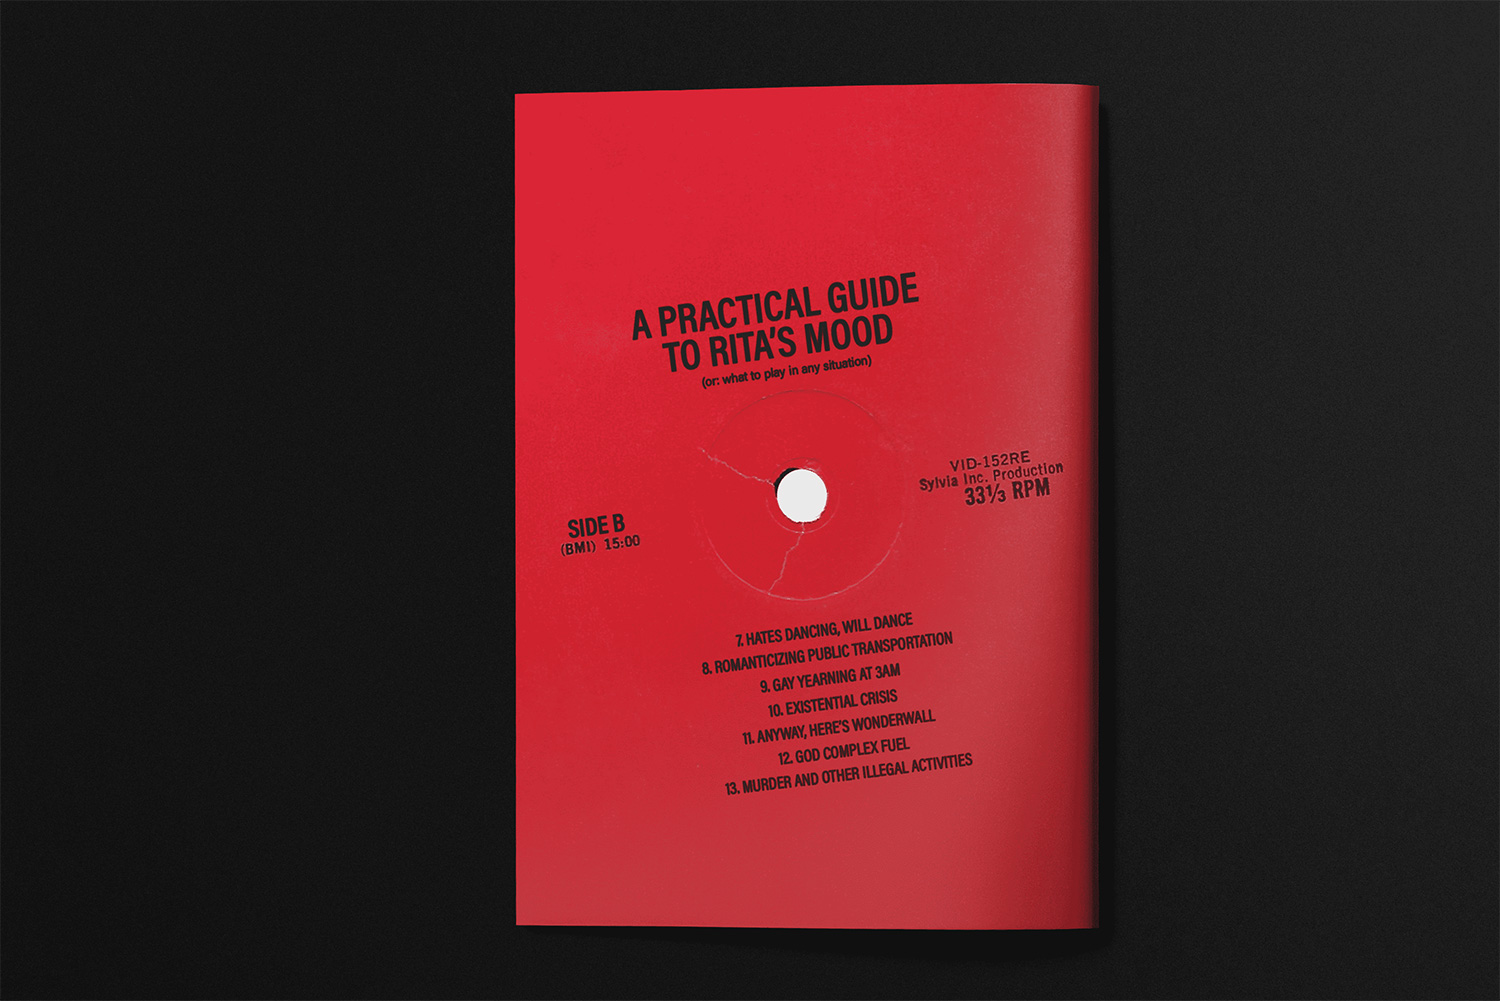 Book back cover emulating a vinyl record label.